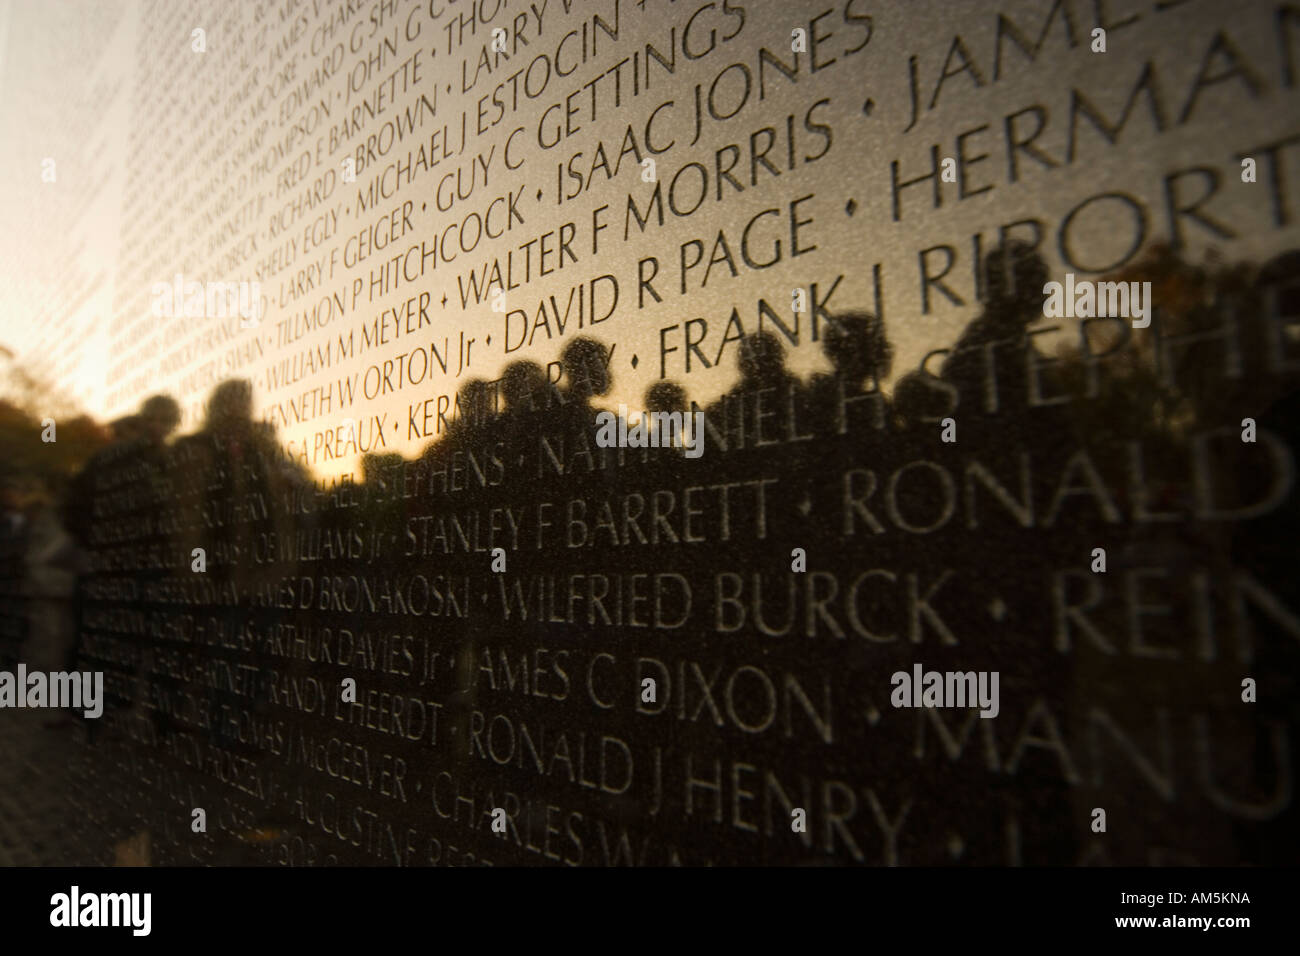 Washington Vietnam Memorial. Washington Vietnam Veterans War Memorial in Washington DC. Stock Photo